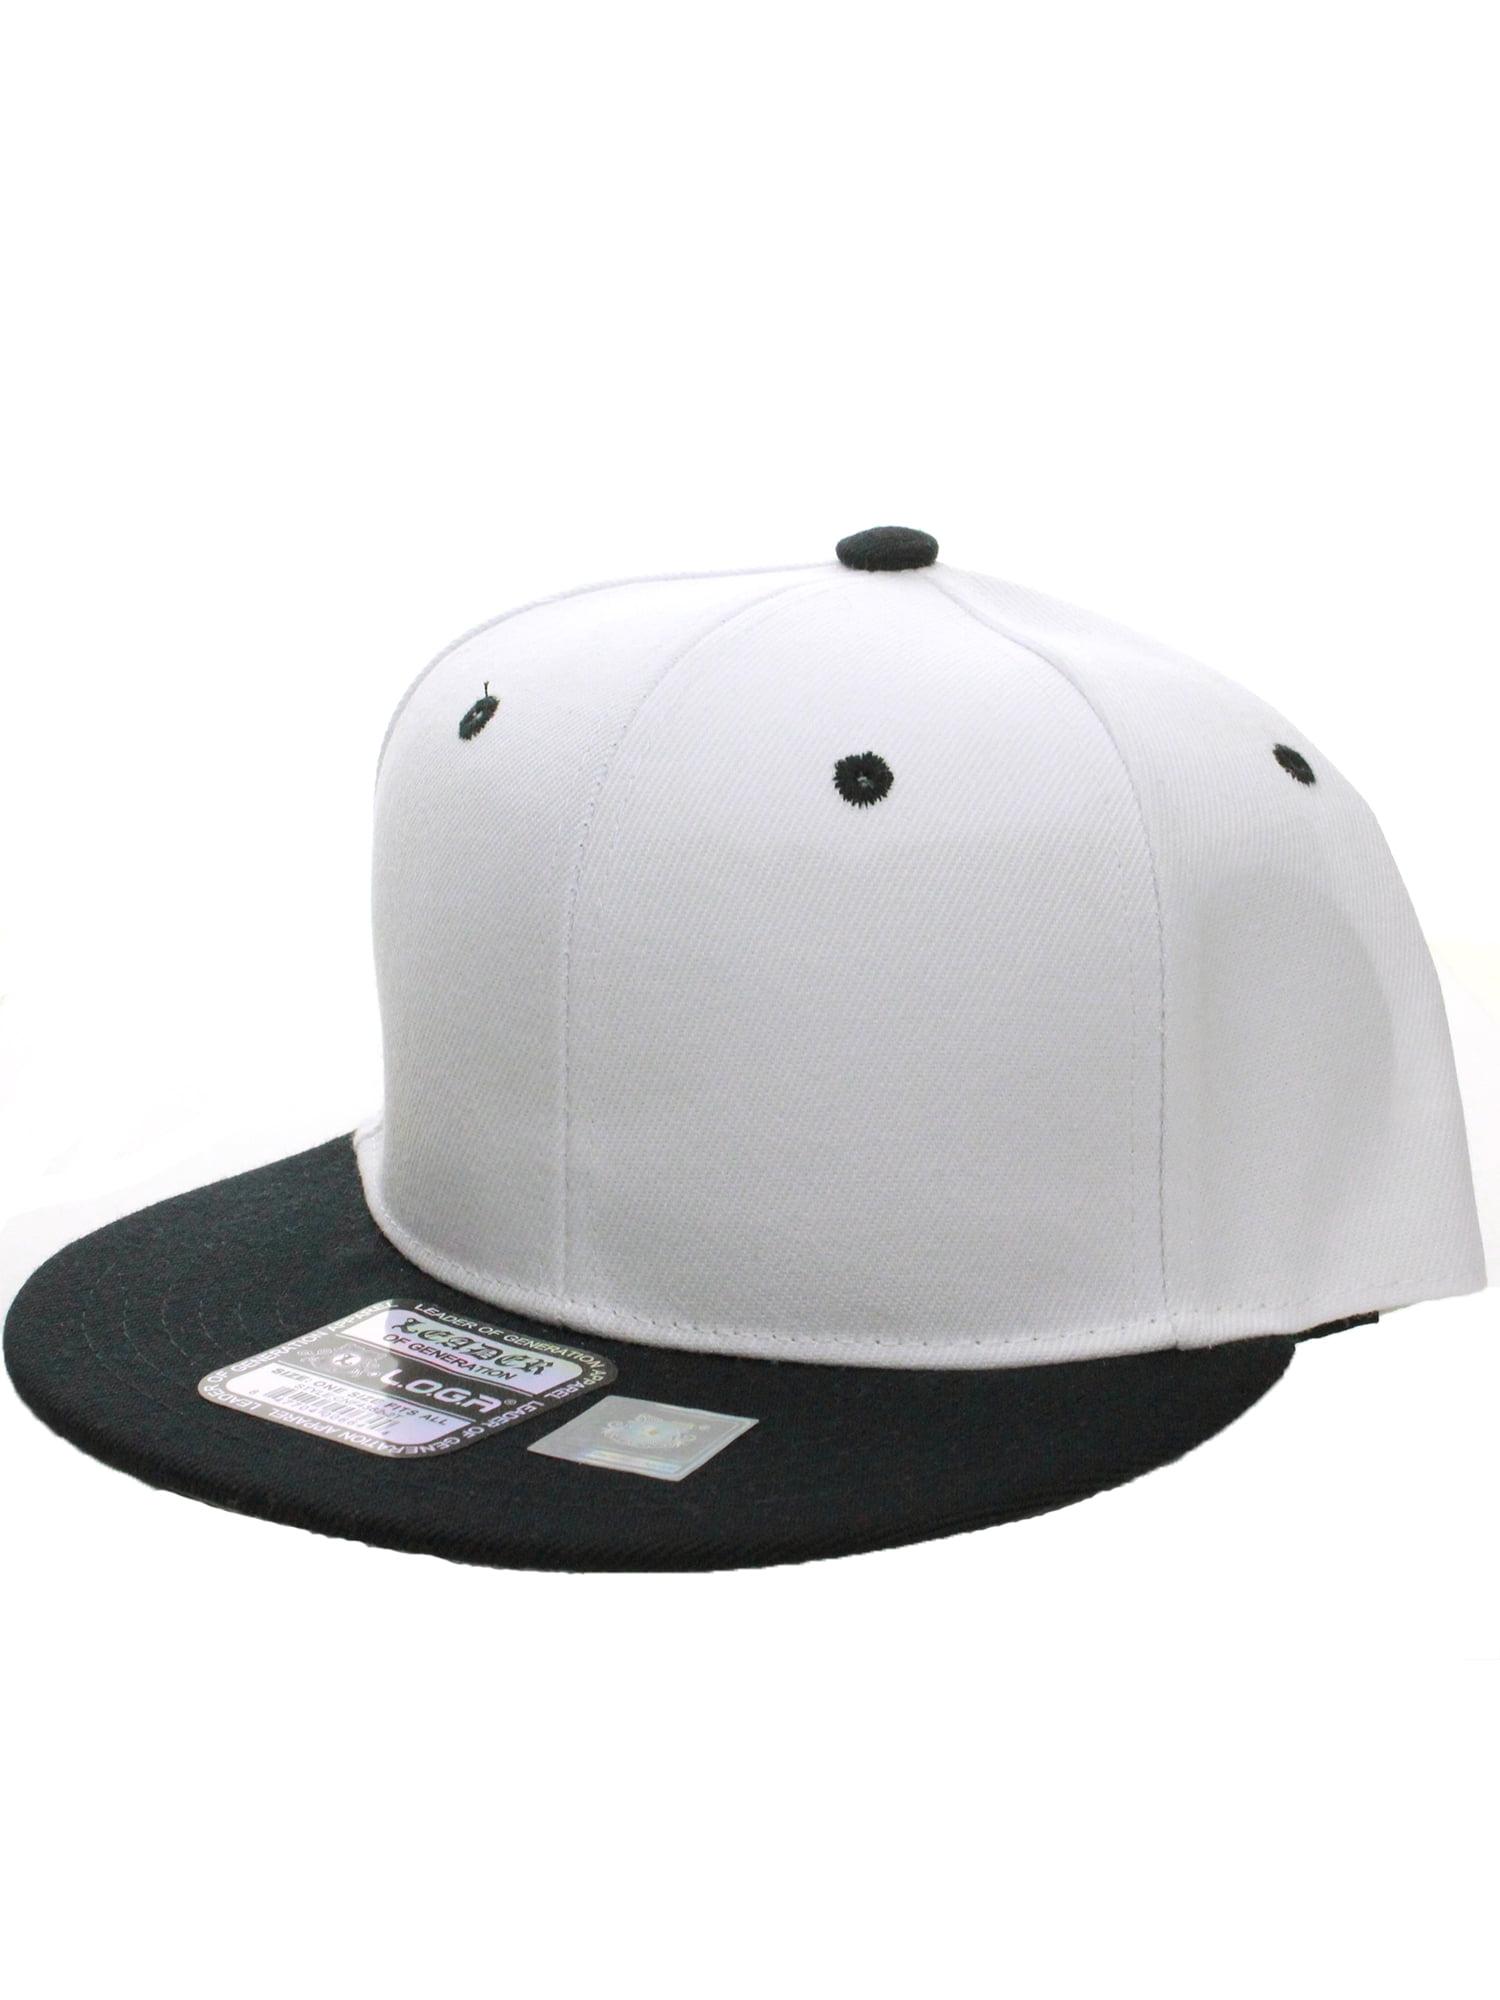 Knipperen Onnauwkeurig Persoon belast met sportgame L.O.G.A. Plain Adjustable Snapback Hats Caps Flat Bill Visor - White Black  - Walmart.com